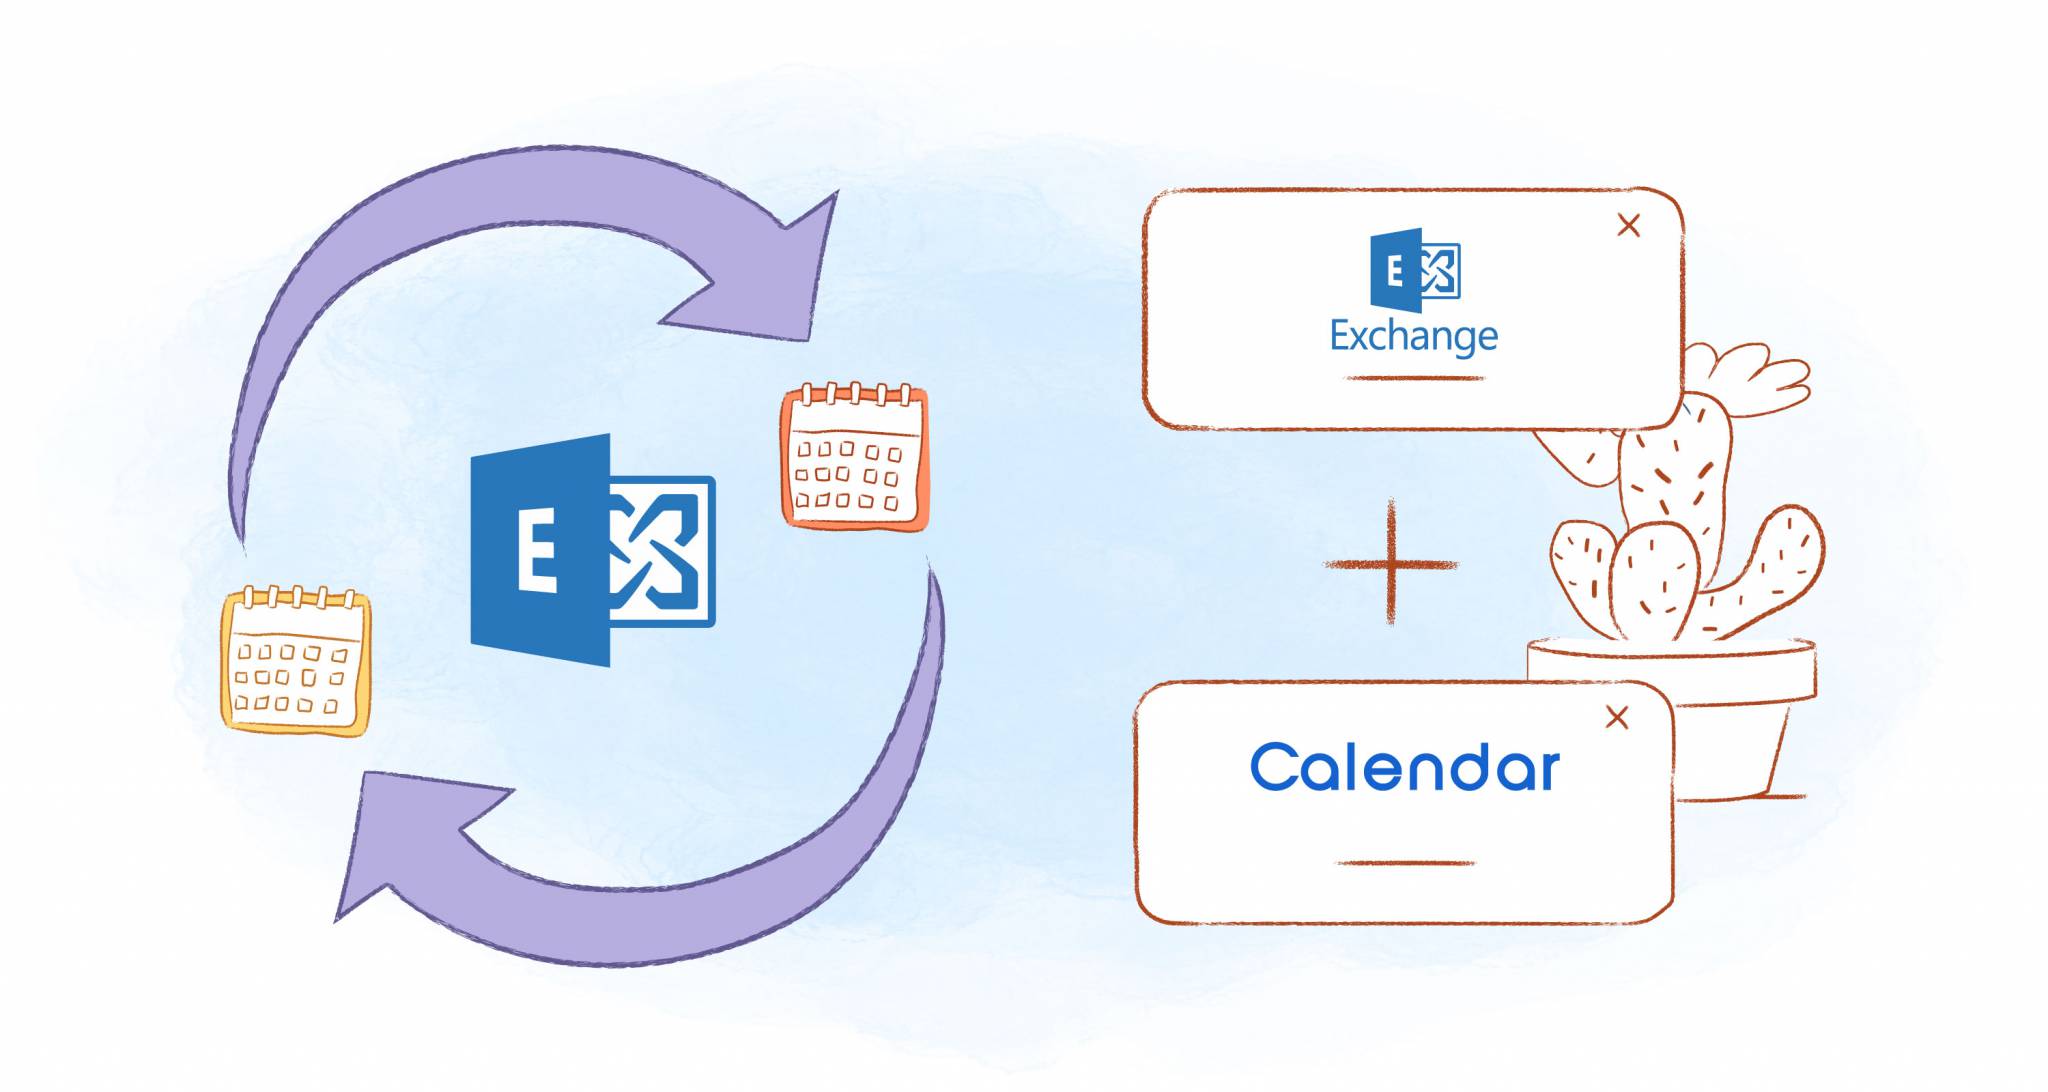 Microsoft Exchange + Calendar